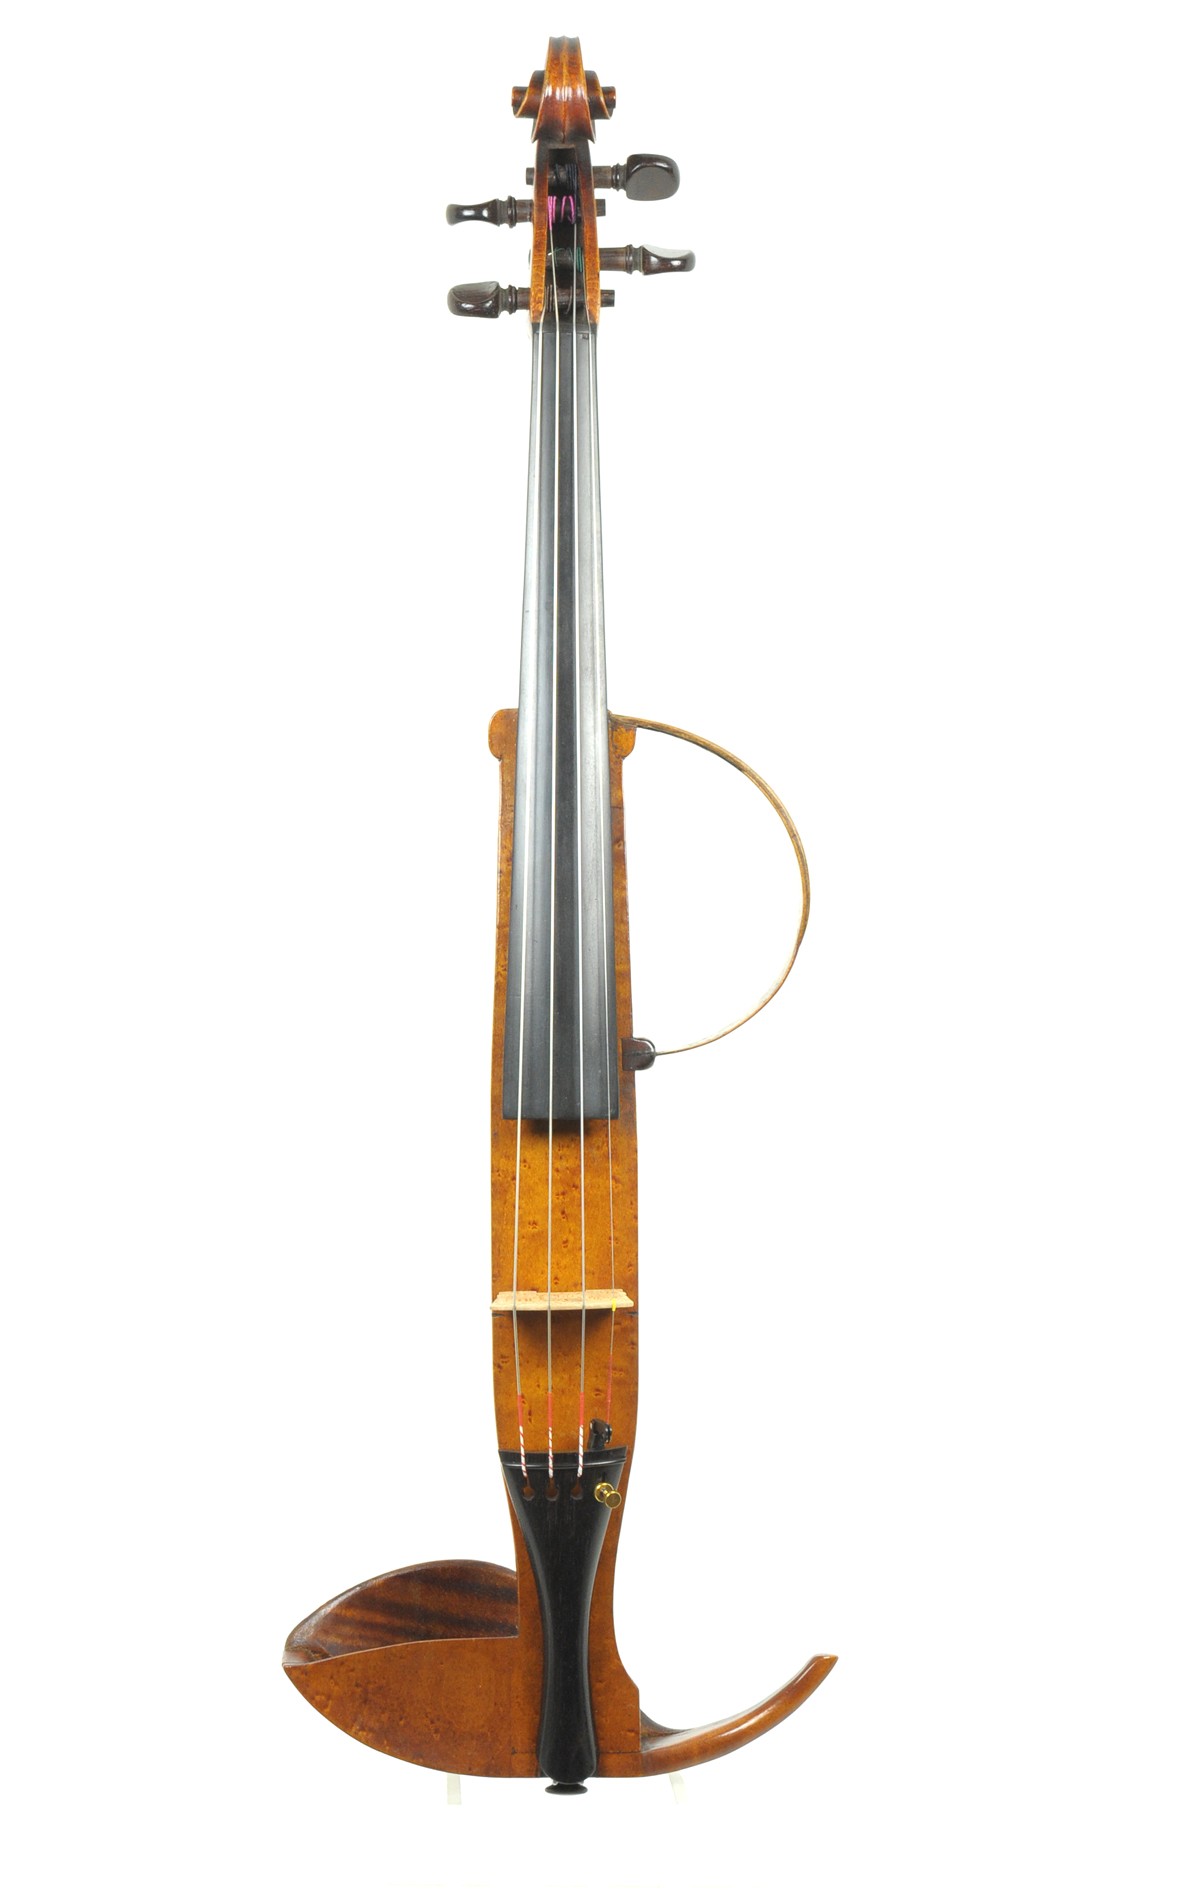 Silend master violin, France around 1850